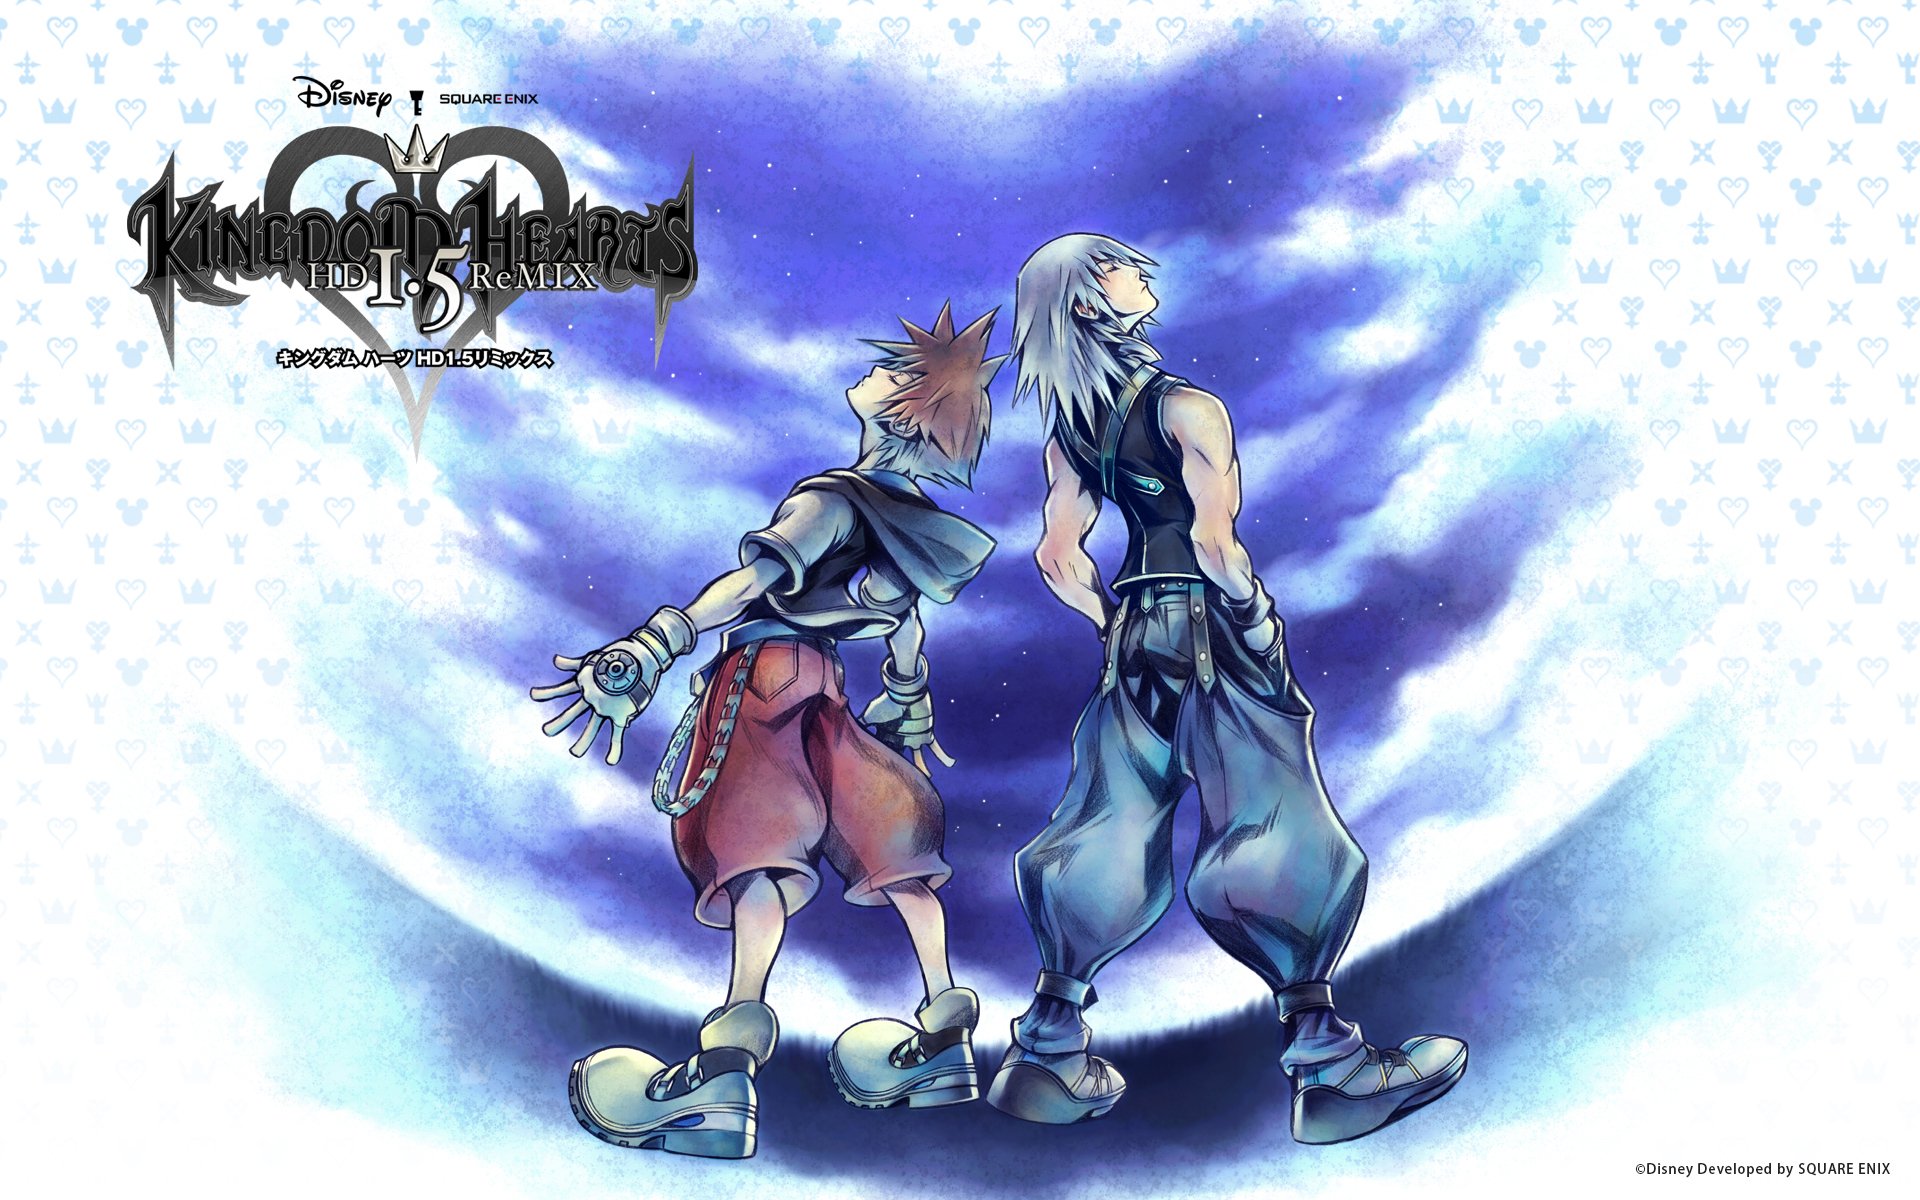 Kingdom Hearts RE:Chain of Memories